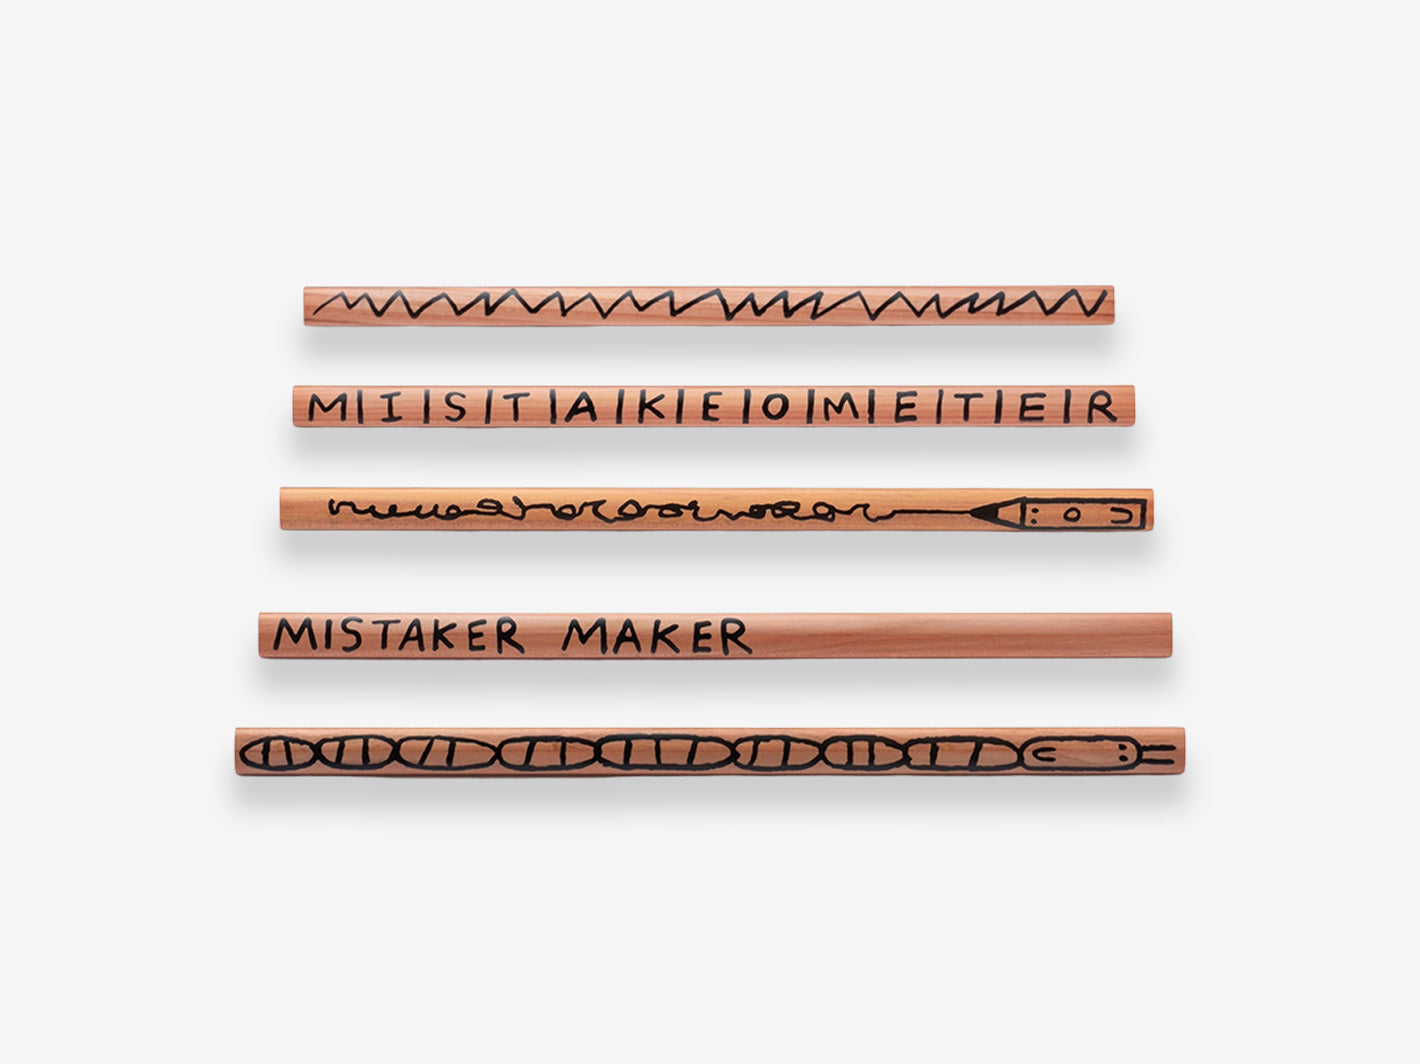 Greeba's Mistaker Maker Pencils